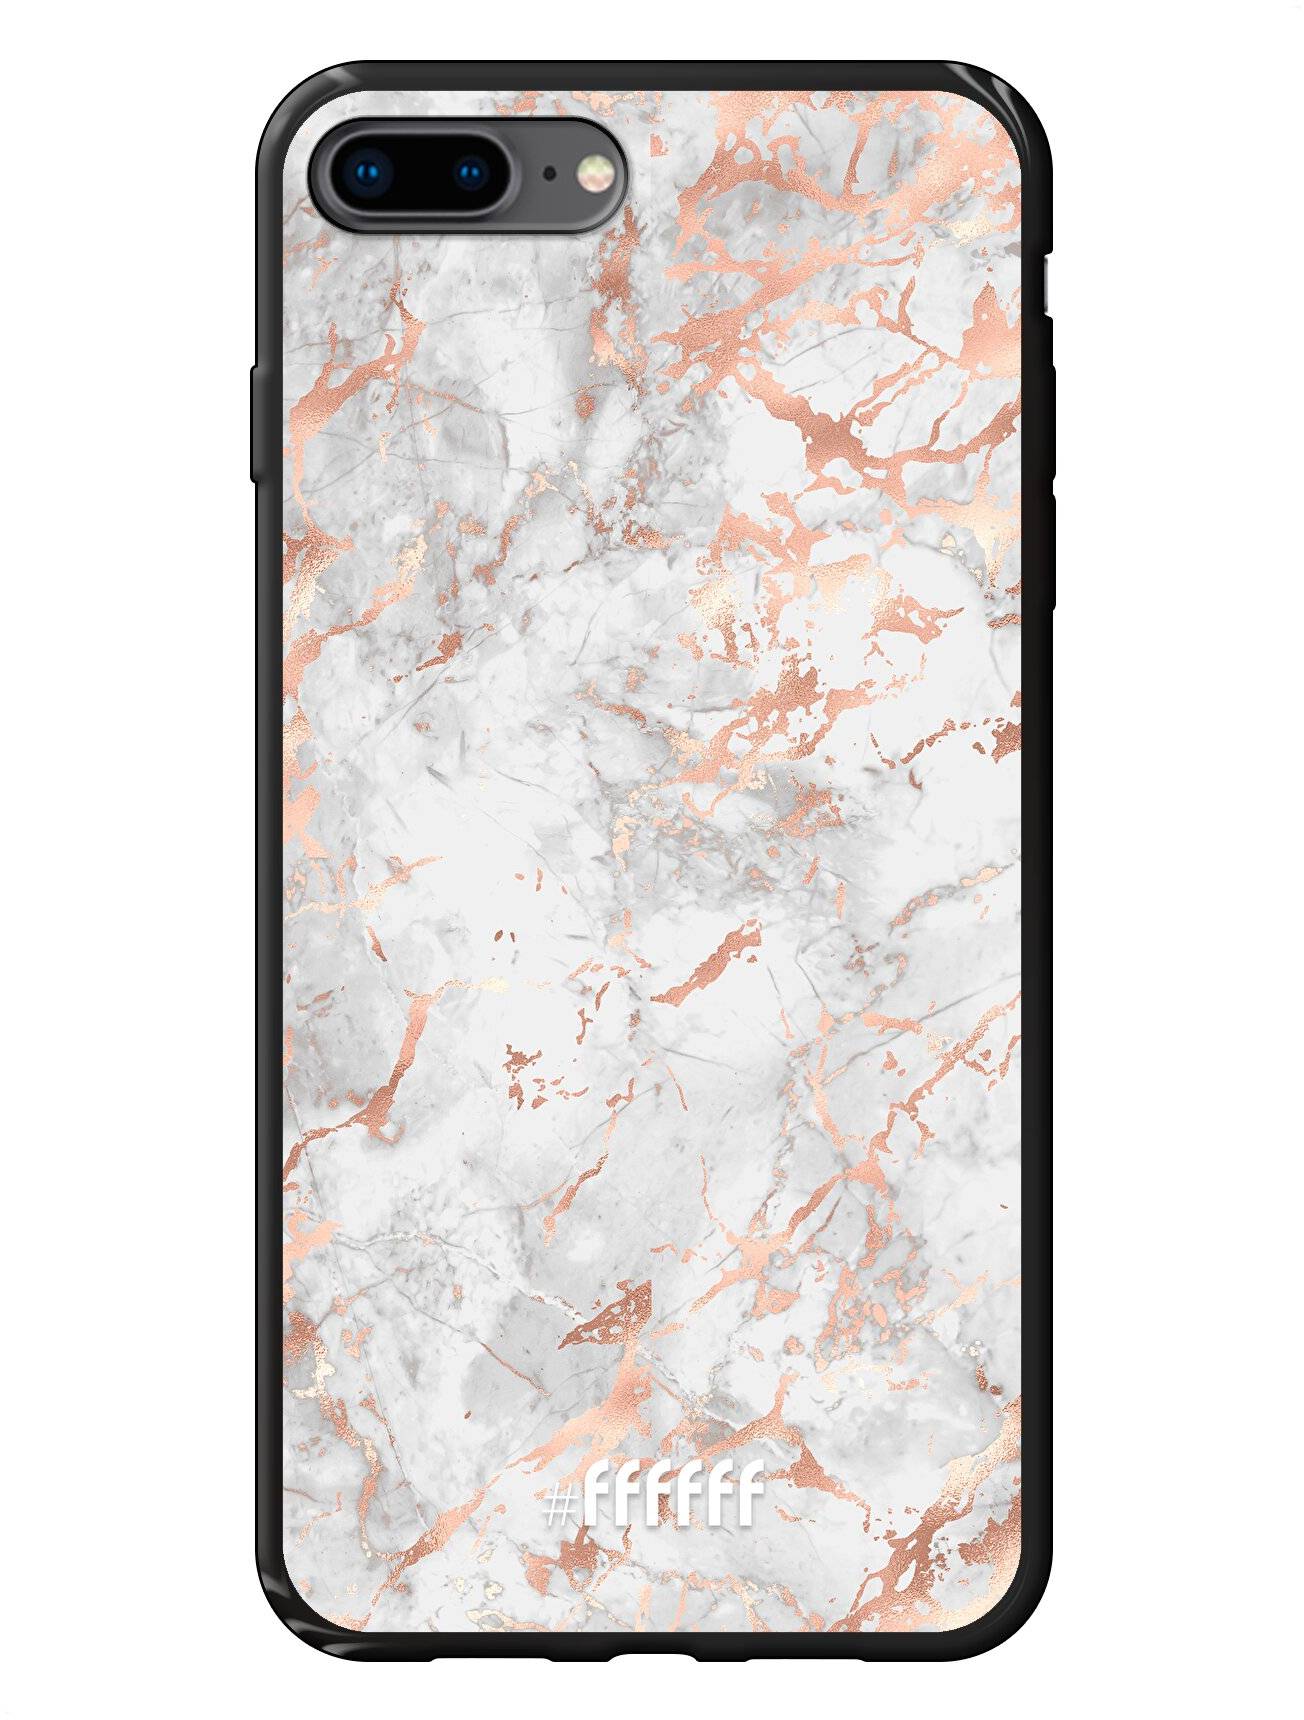 Peachy Marble iPhone 7 Plus